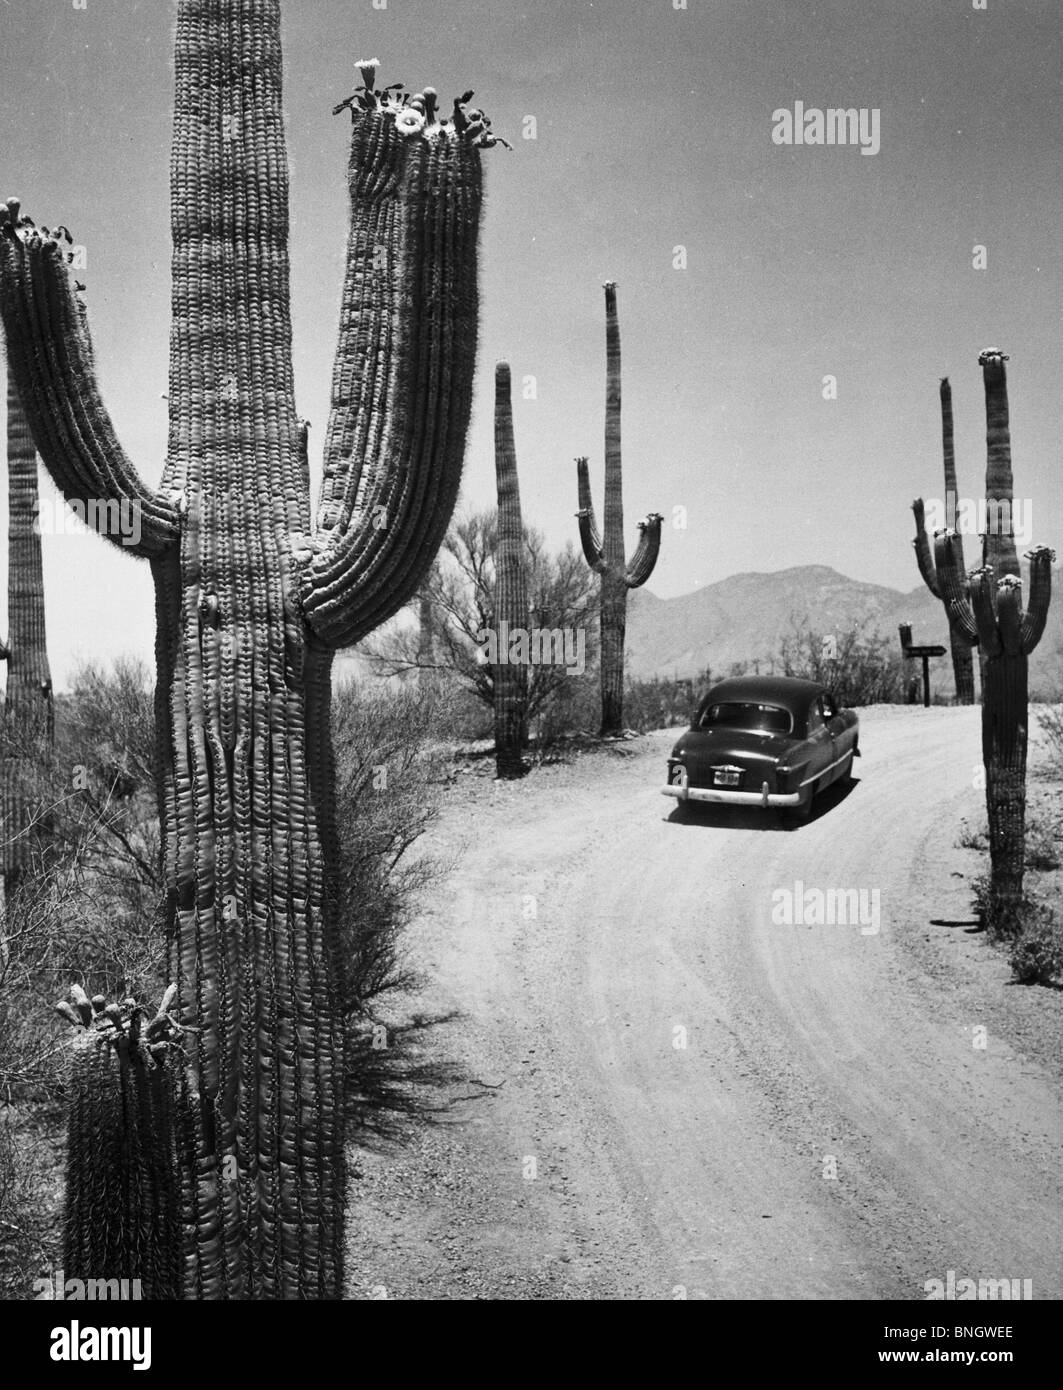 USA, Arizona, Saguaro National Park, car on desert road Stock Photo